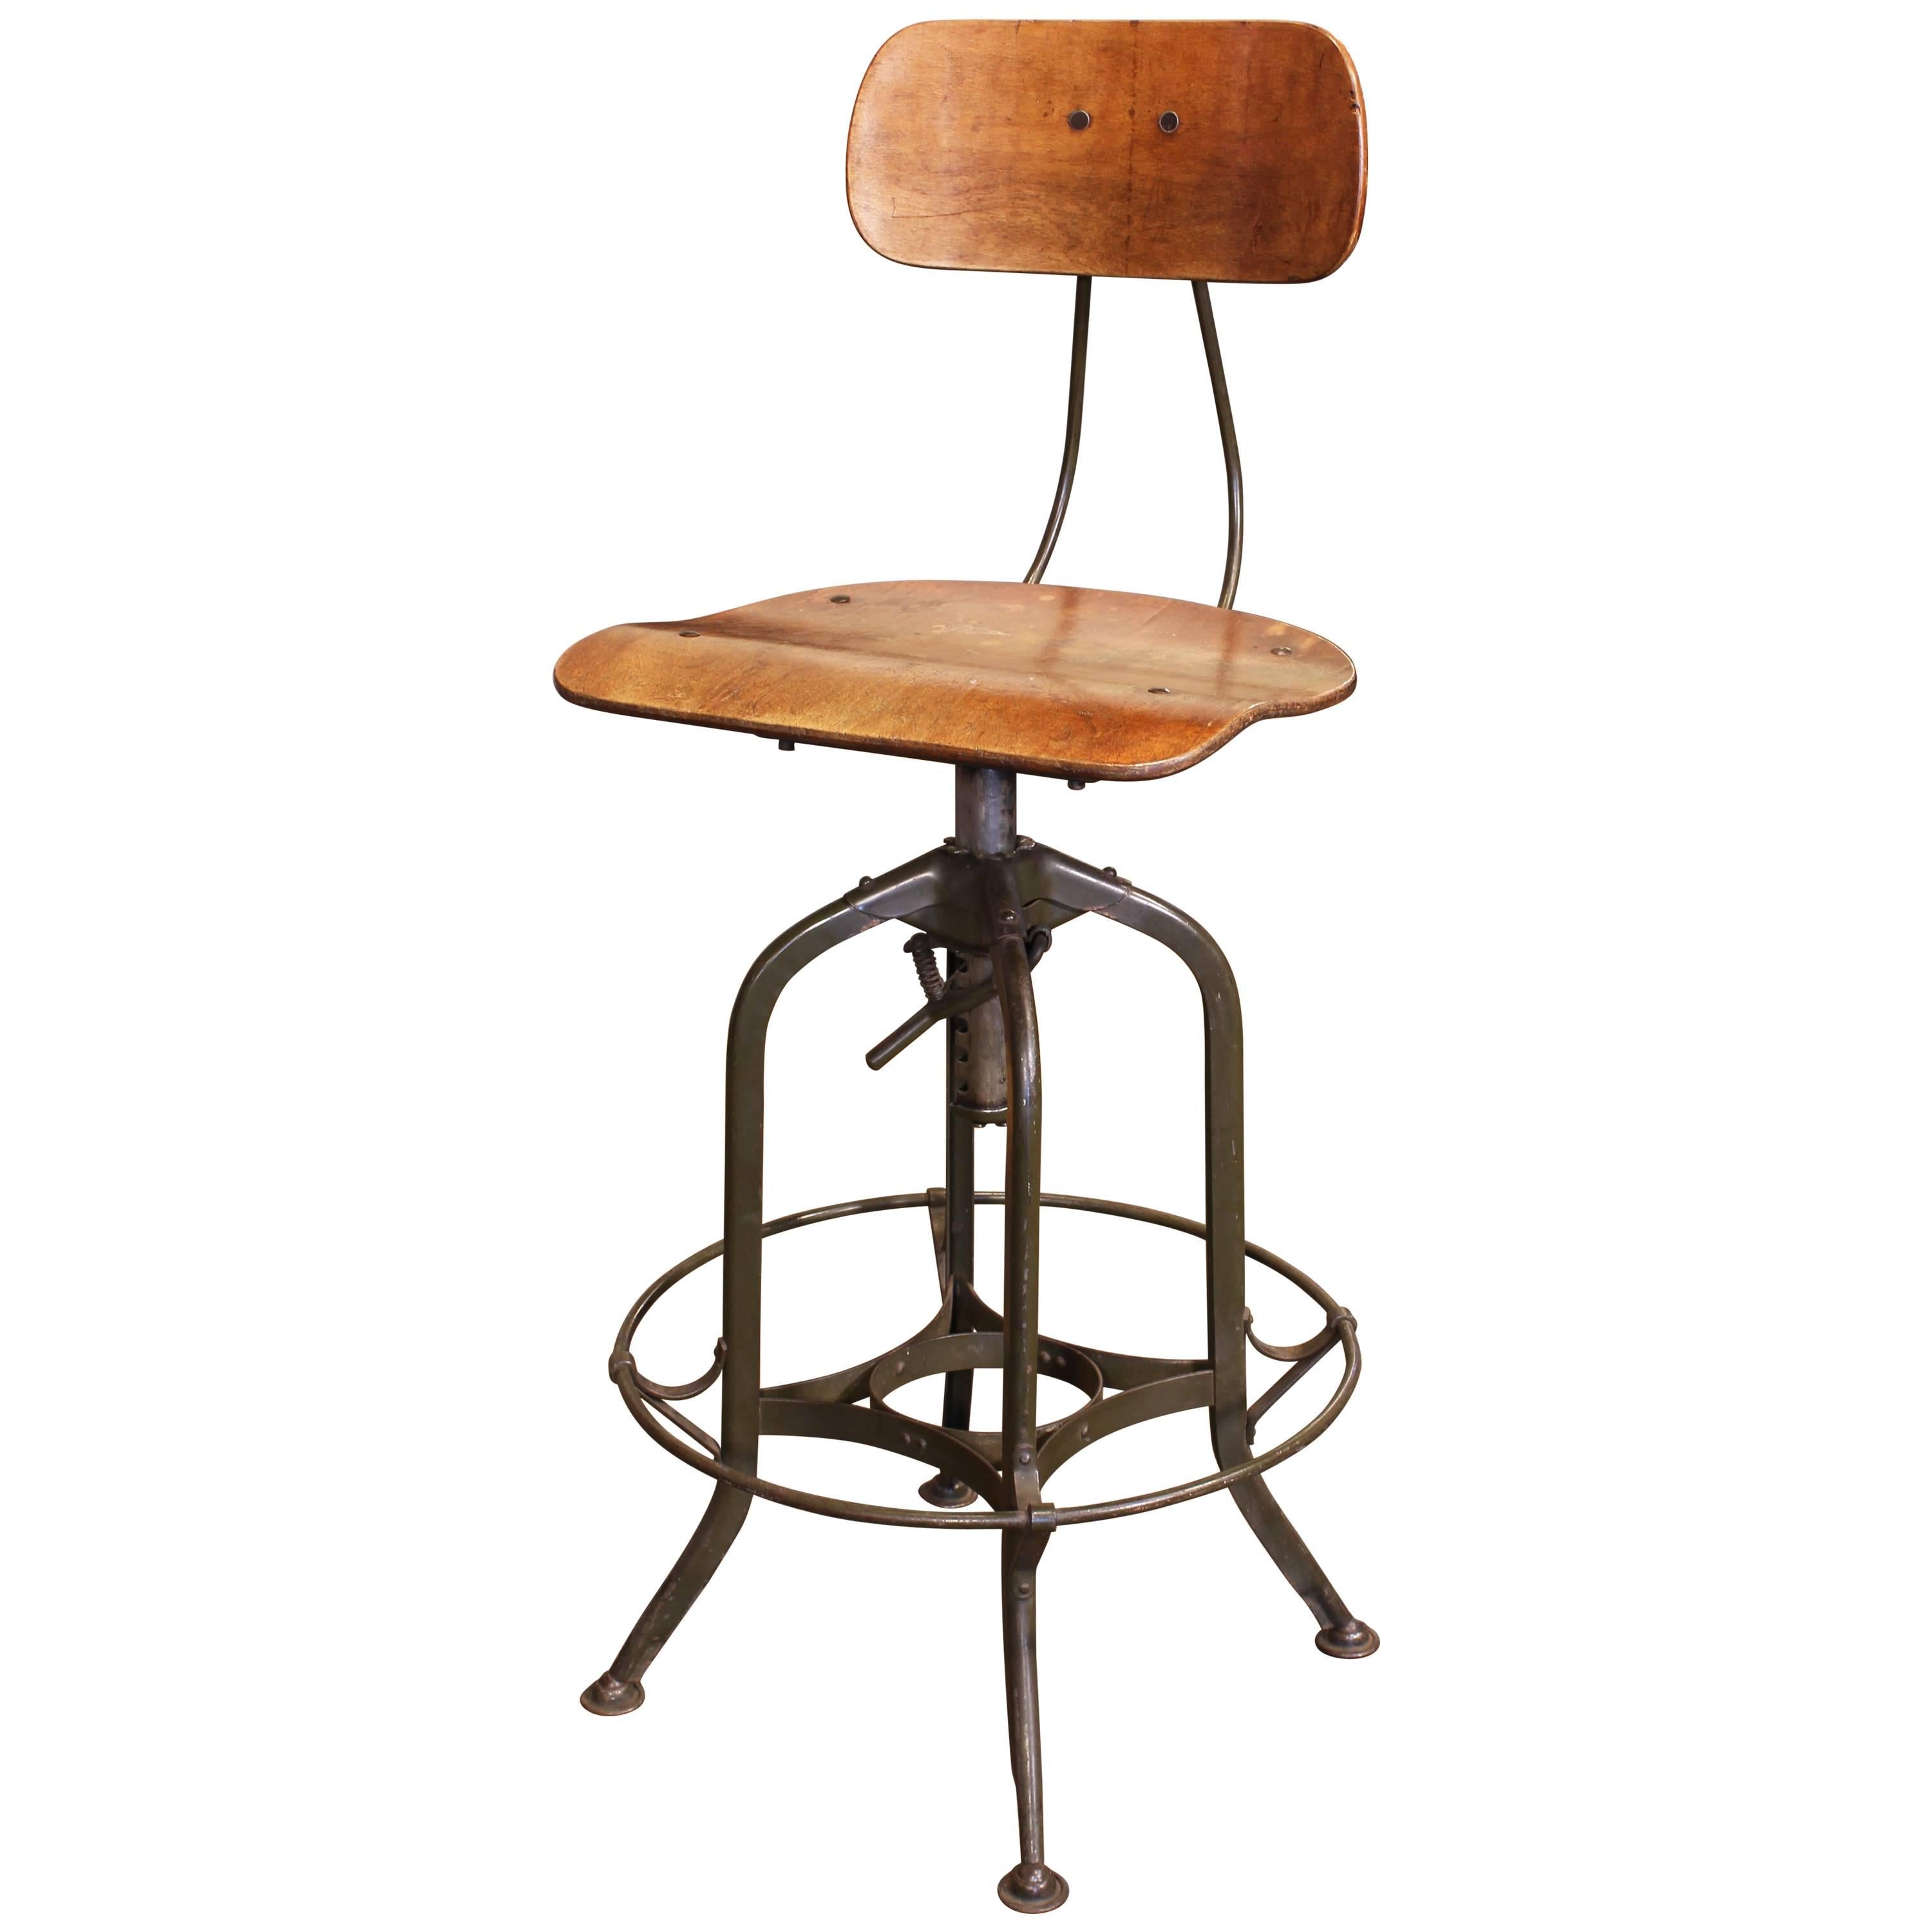 Original Vintage Adjustable Toledo Bar Stool Drafting Chair